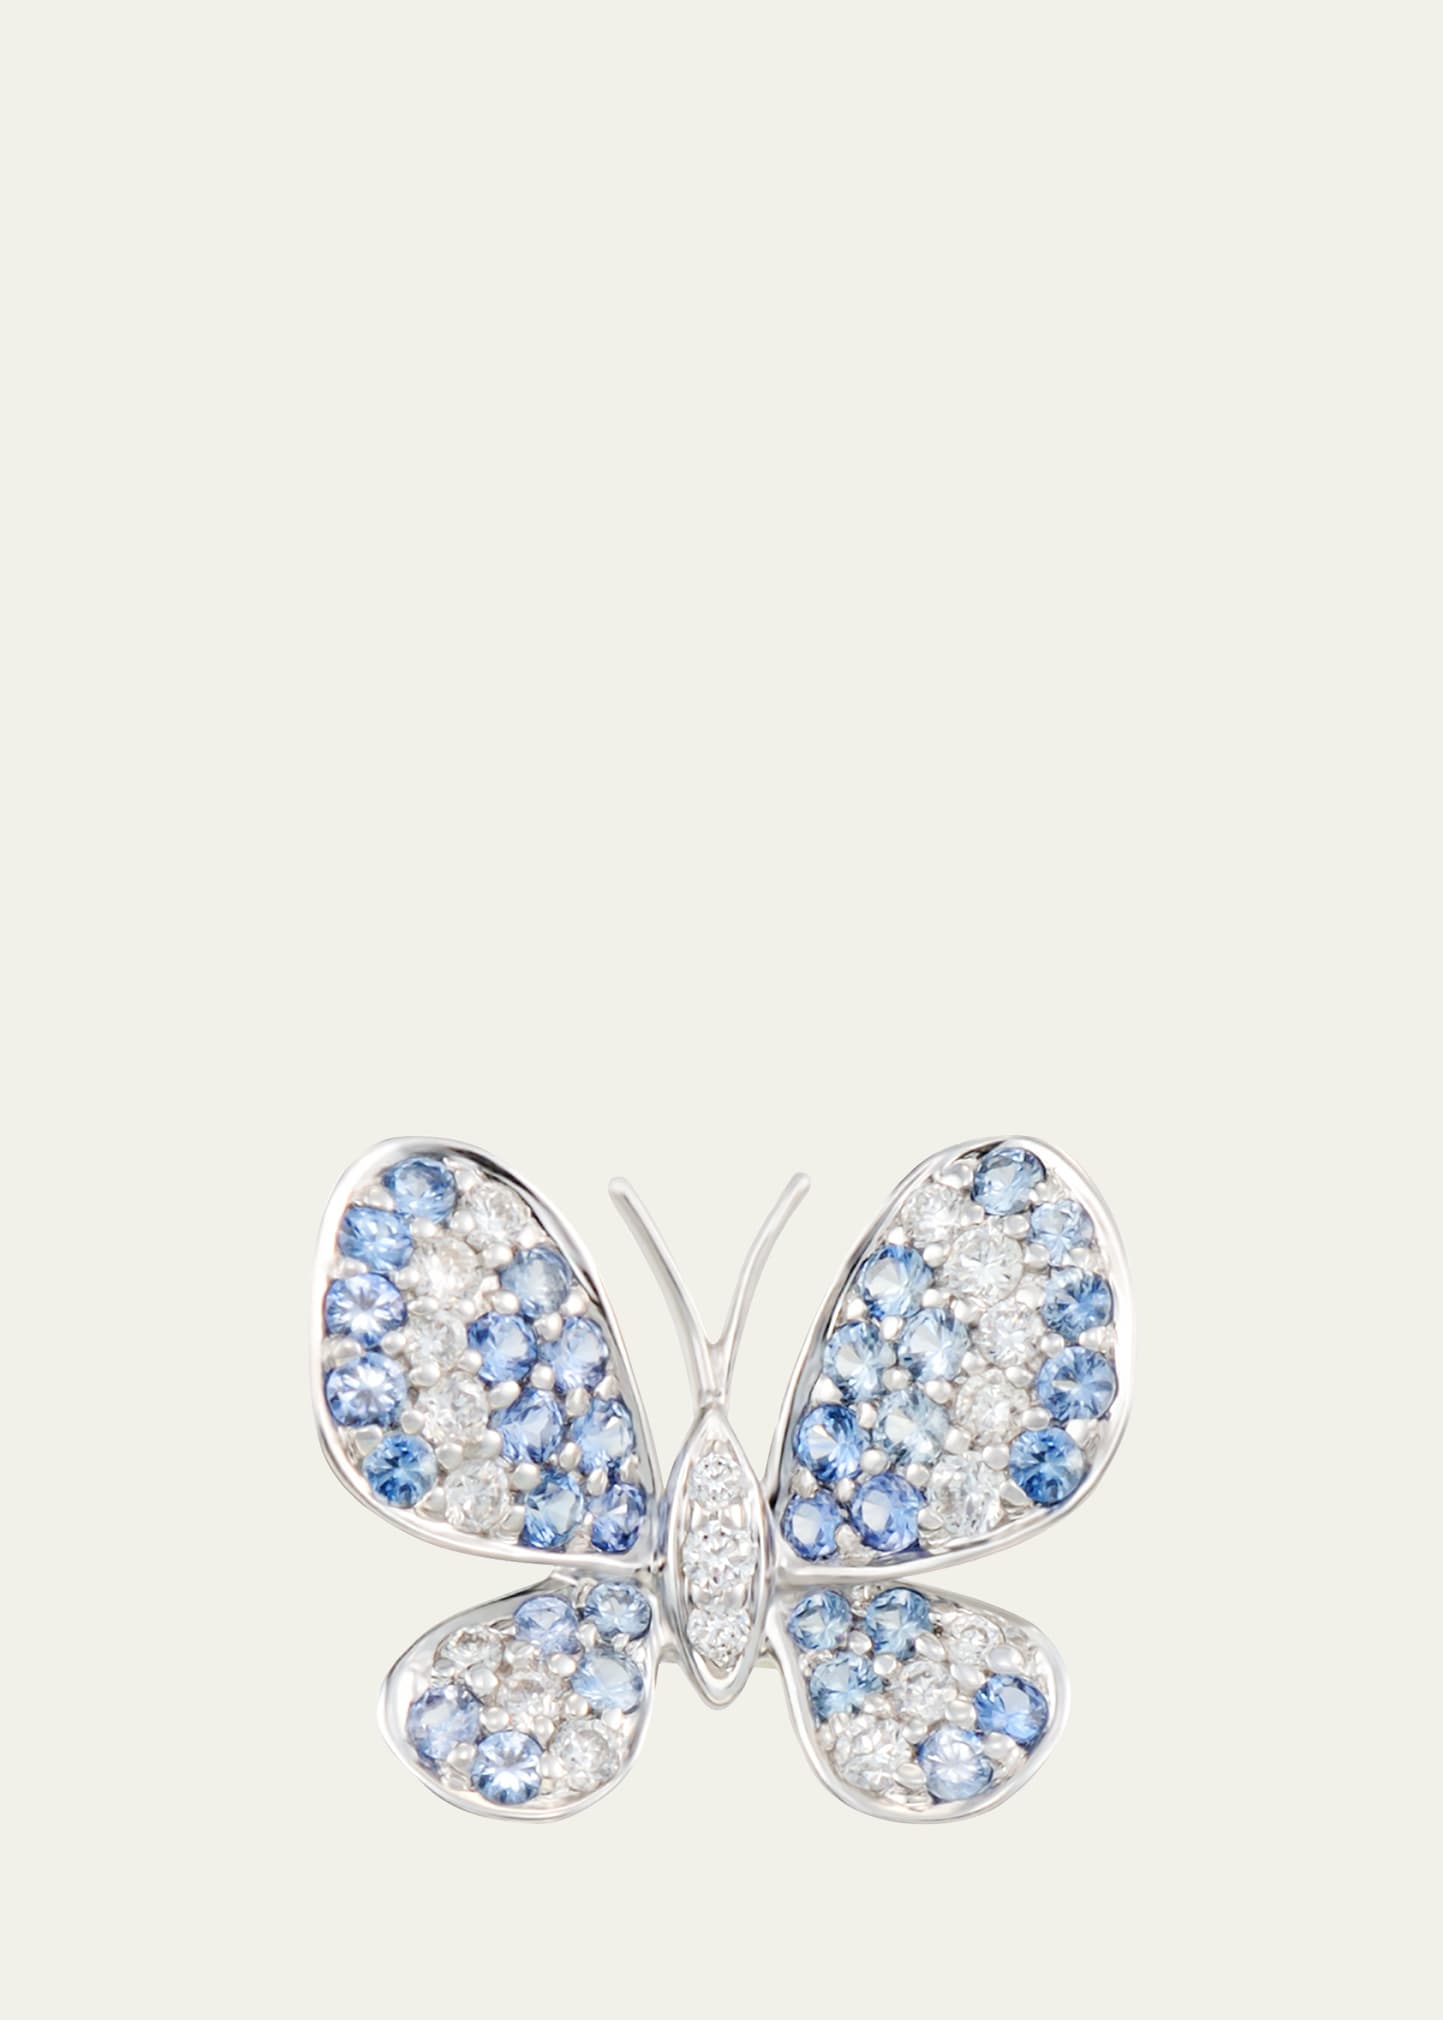 Mio Harutaka 18k White Gold Flower Single Earring With Diamond And Blue Sapphire